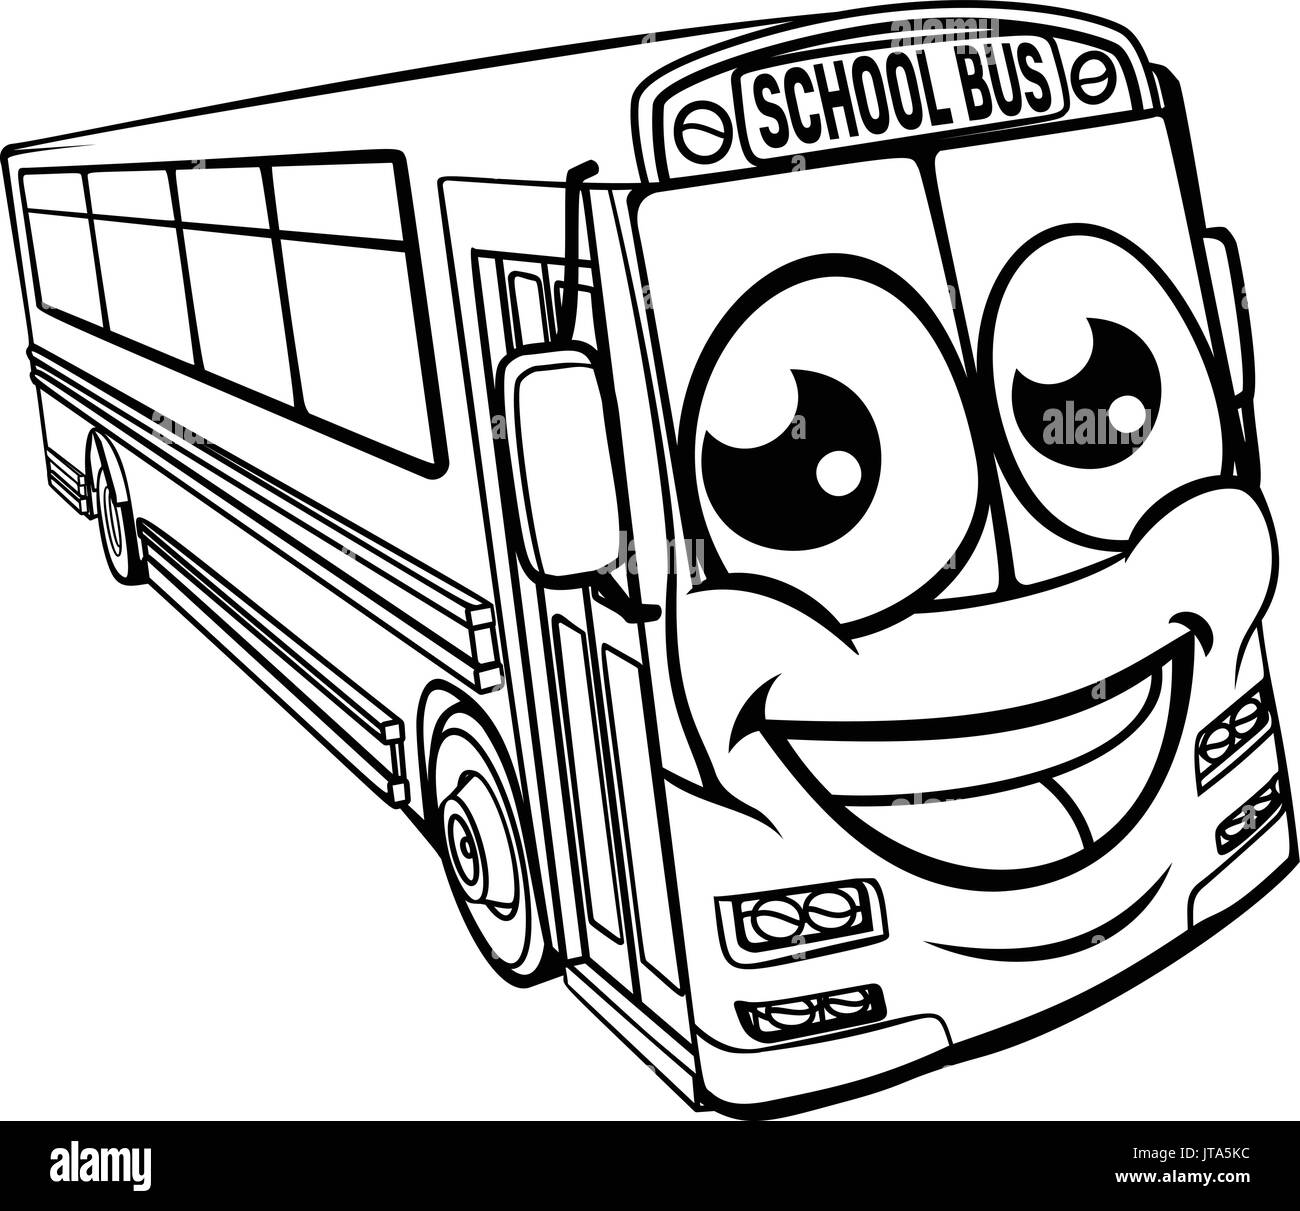 Cartoon Character School Bus Mascot Stock Vector